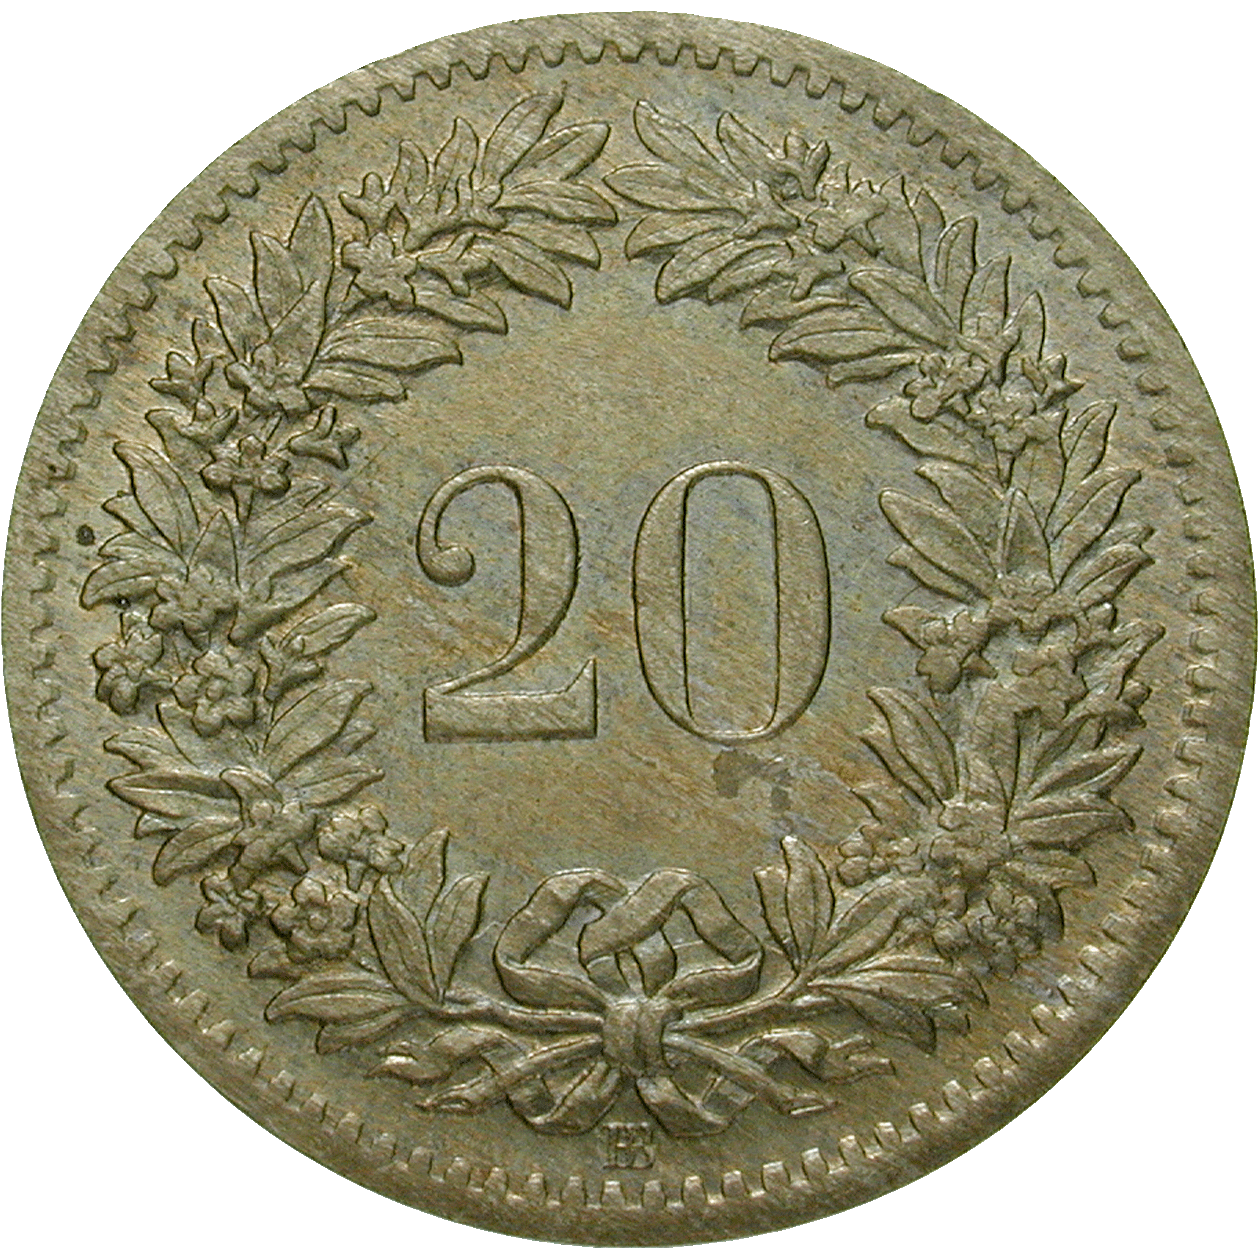 Schweizerische Eidgenossenschaft, 20 Rappen 1850 (reverse)